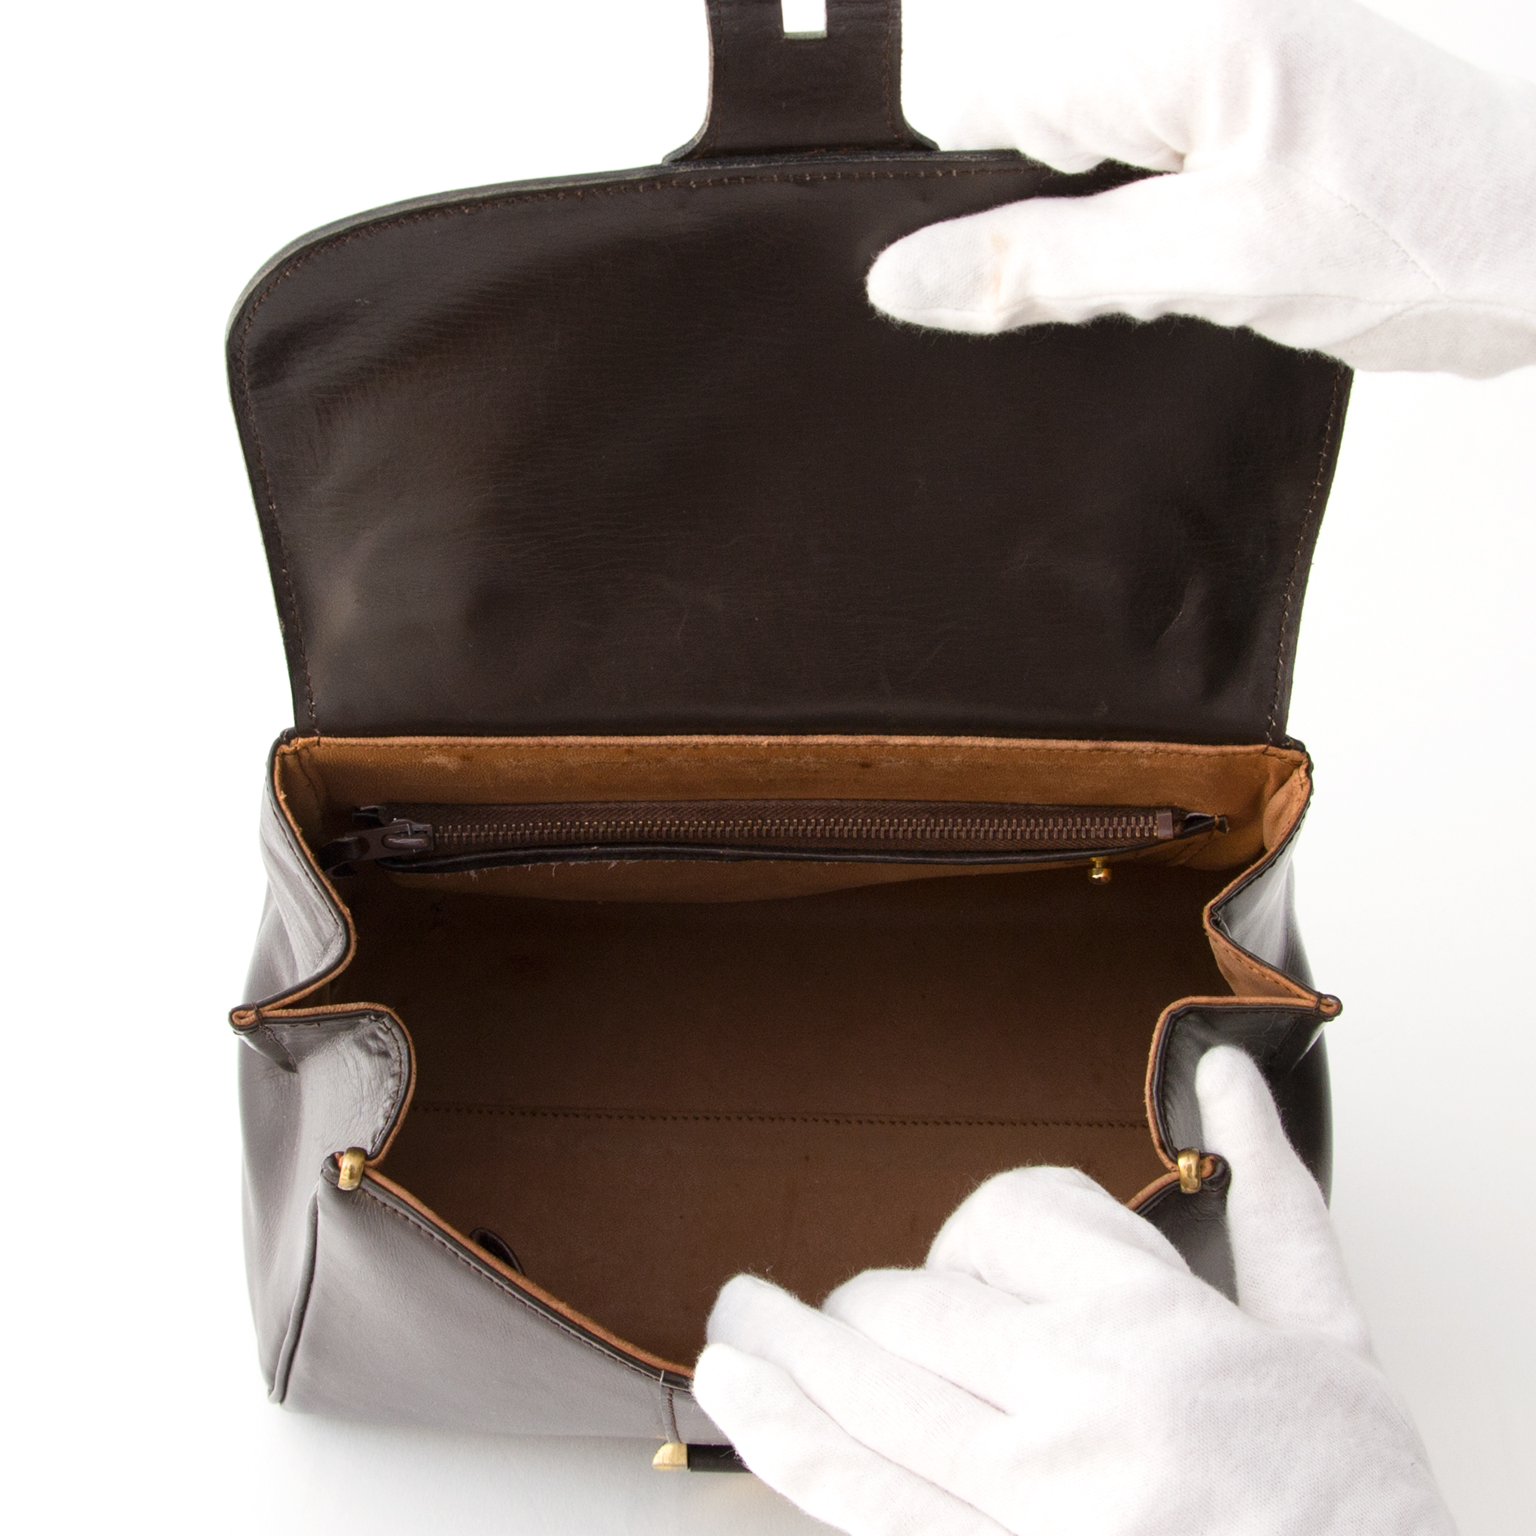 Delvaux Tempête Pm Leather Bag in Brown